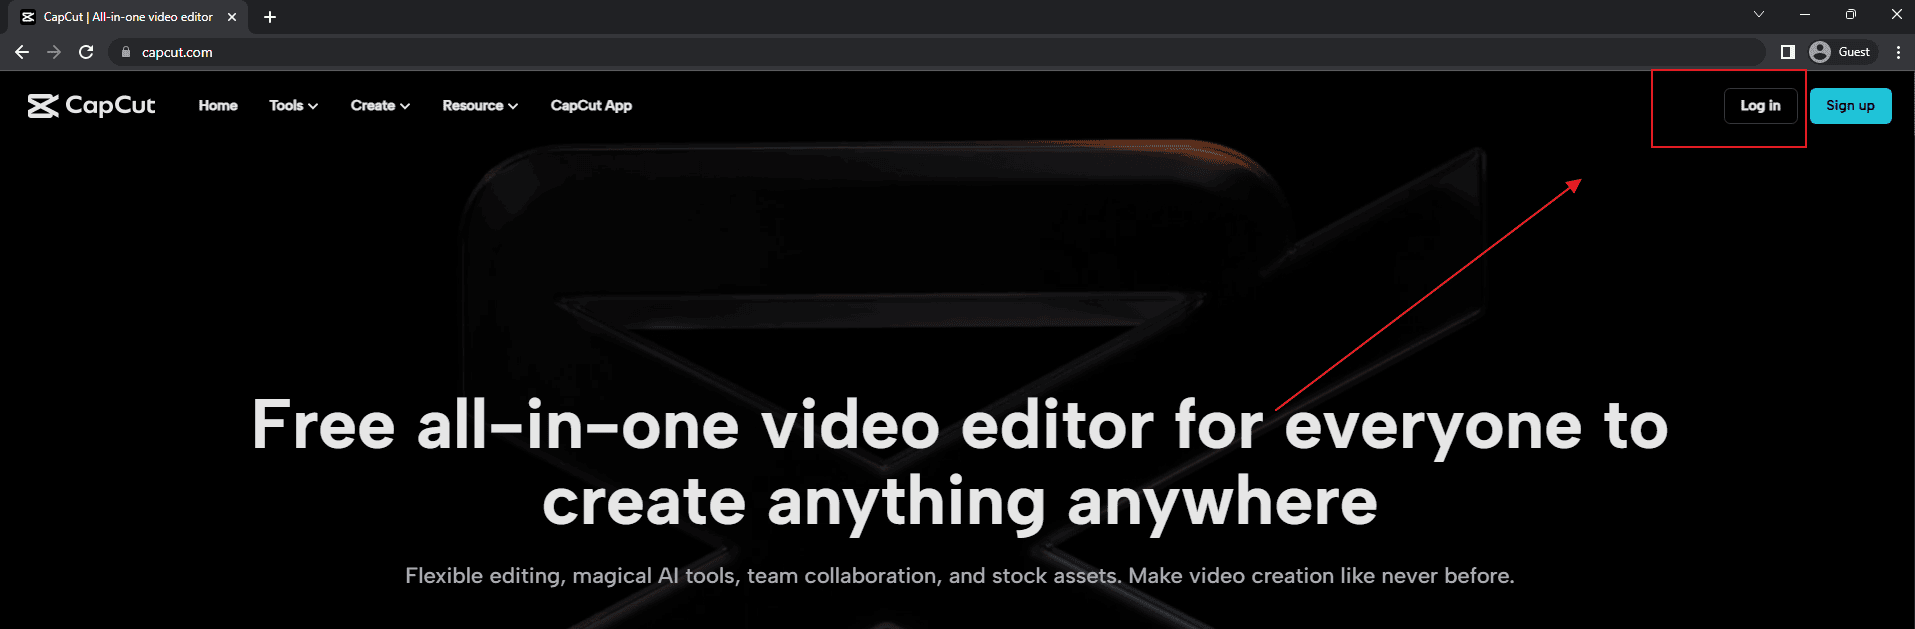 cara menggunakan capcut di laptop untuk edit video